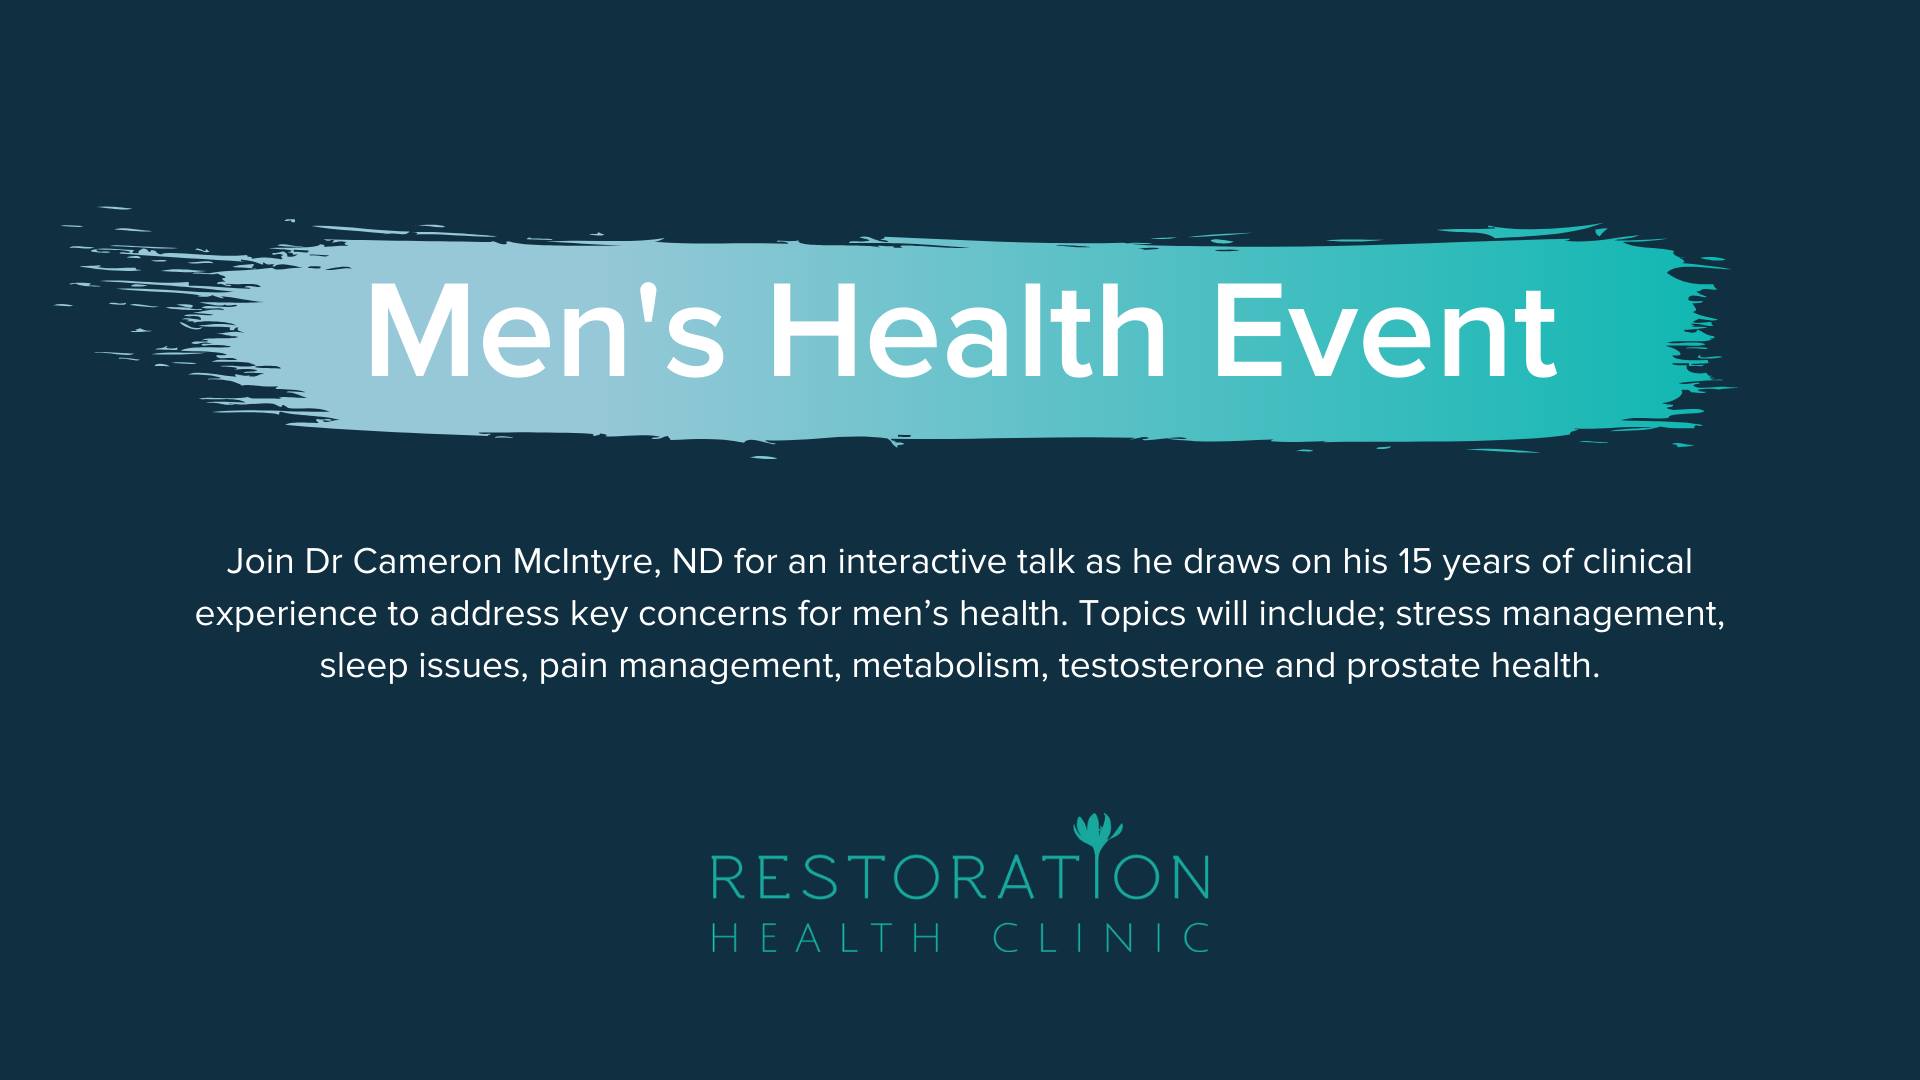 Men's Health Event at Restoration Health Clinic